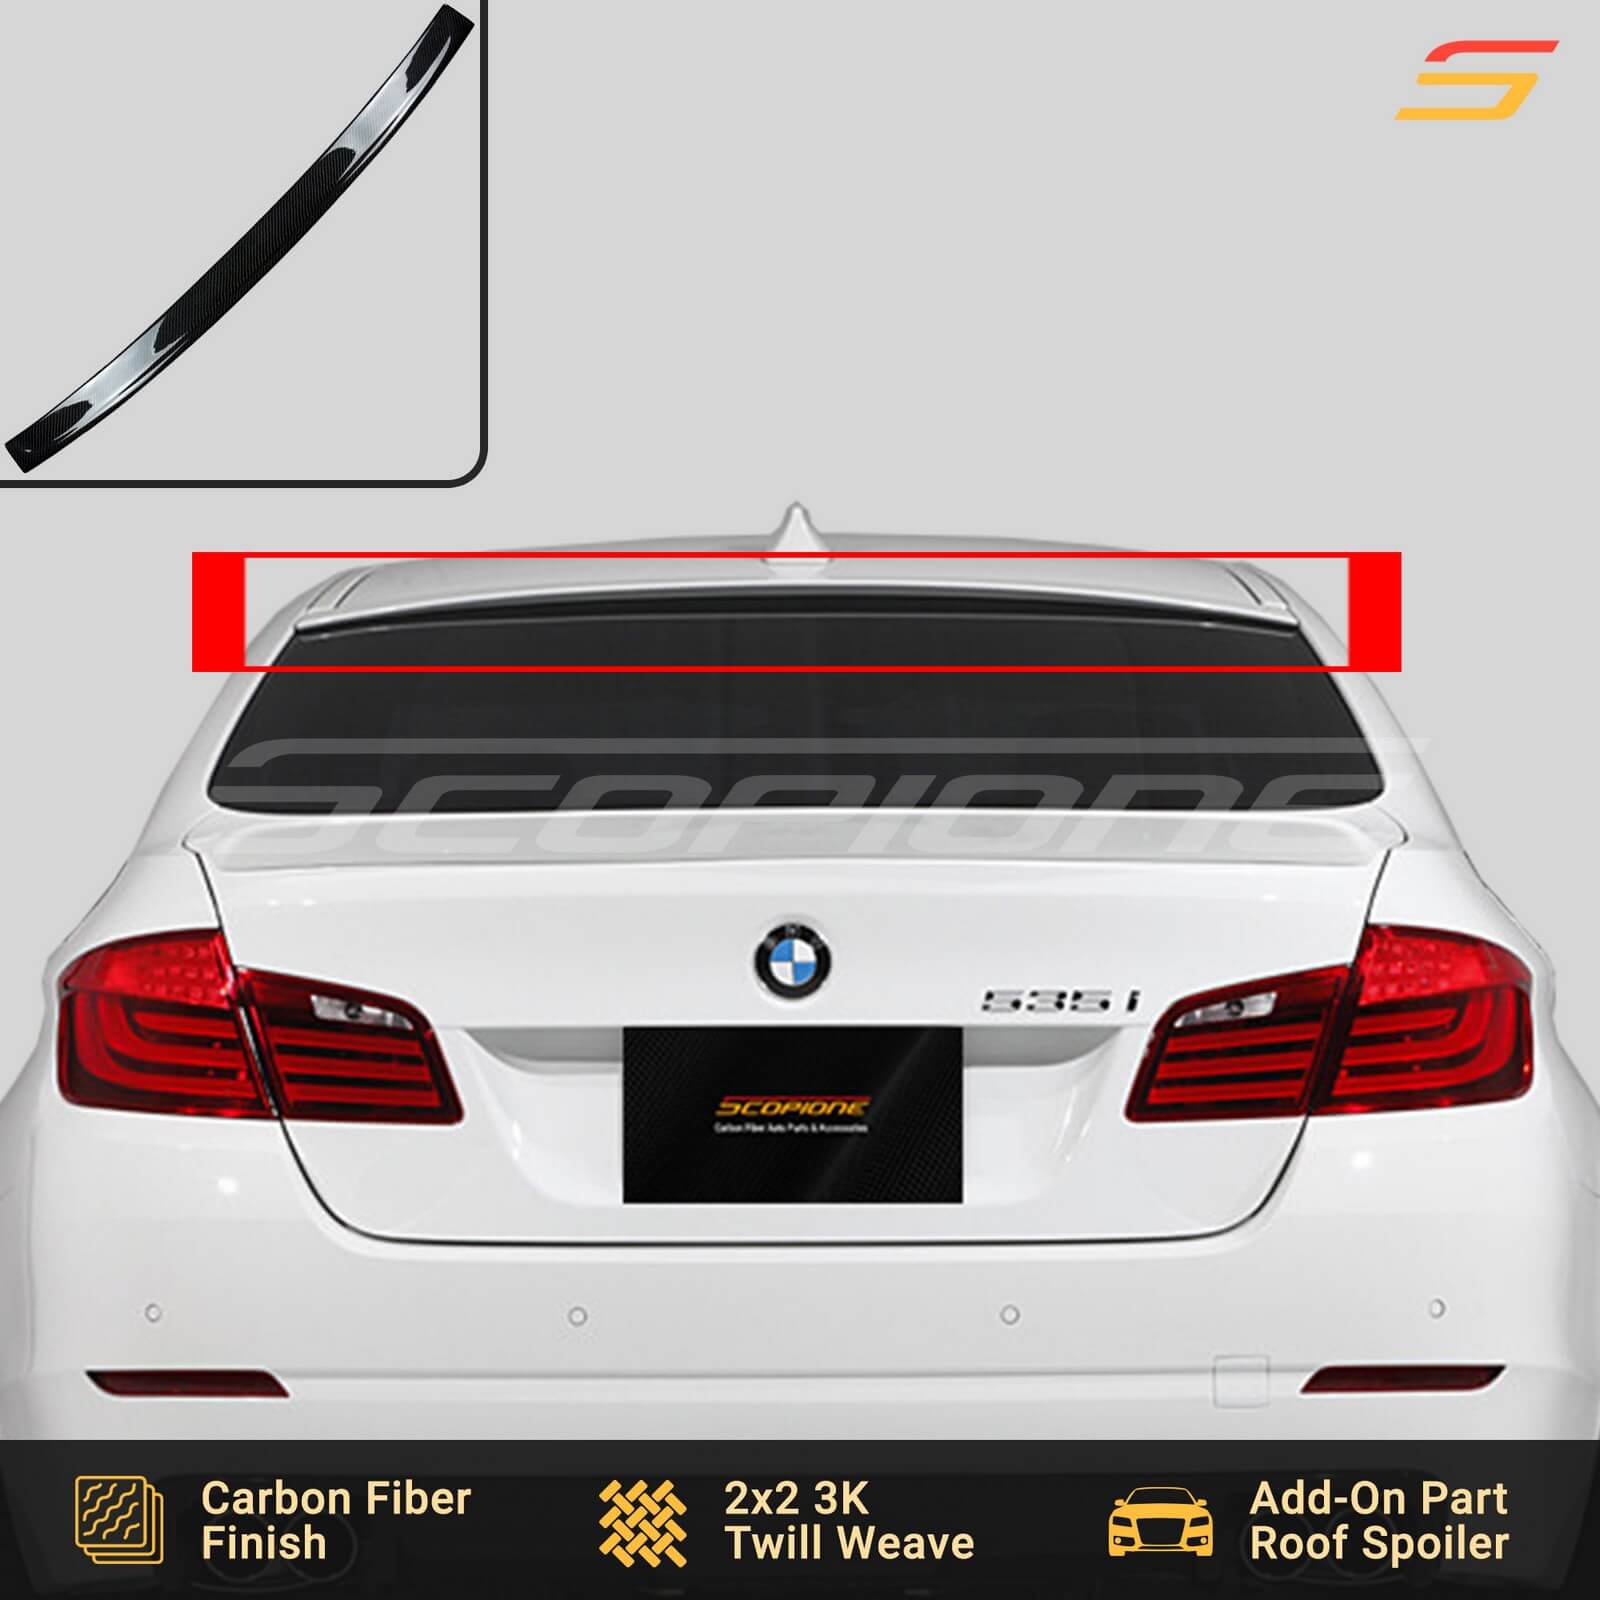 Scopione Carbon Fiber Rear Trunk Spoiler for BMW 5 Series F10